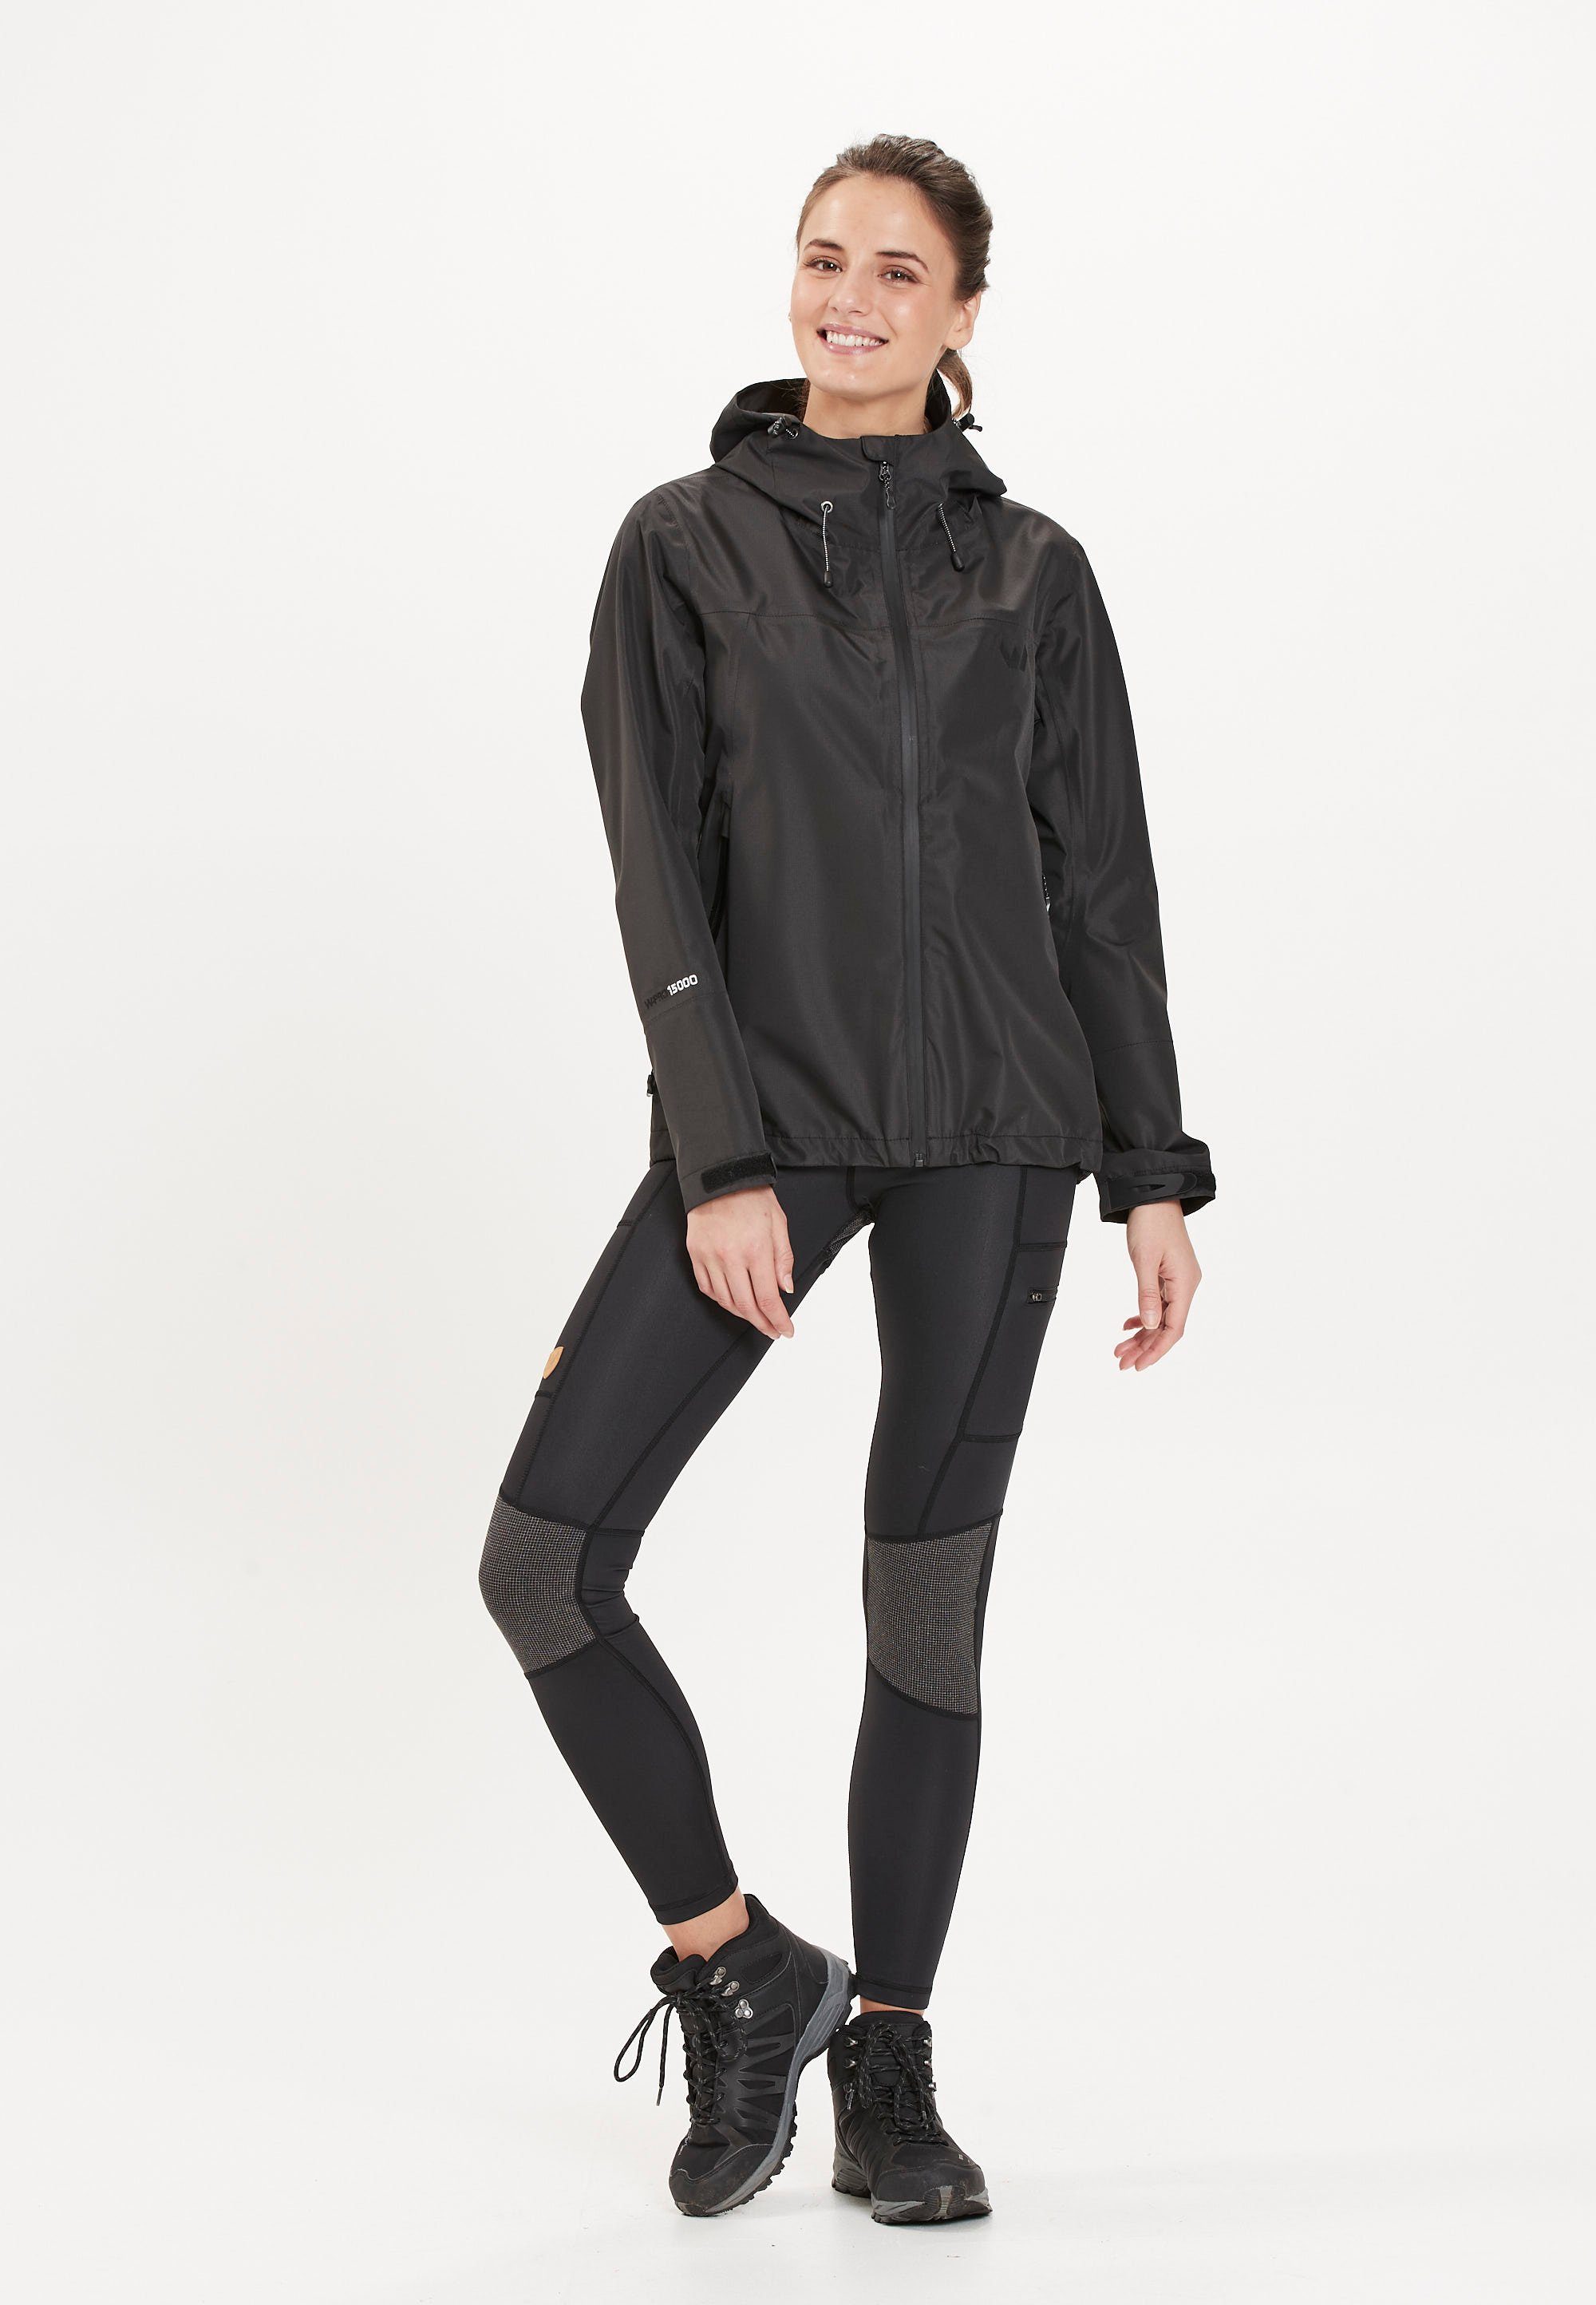 WHISTLER Softshelljacke BROOK schwarz praktischer 15000 W-PRO Kapuze mit W Jacket Shell